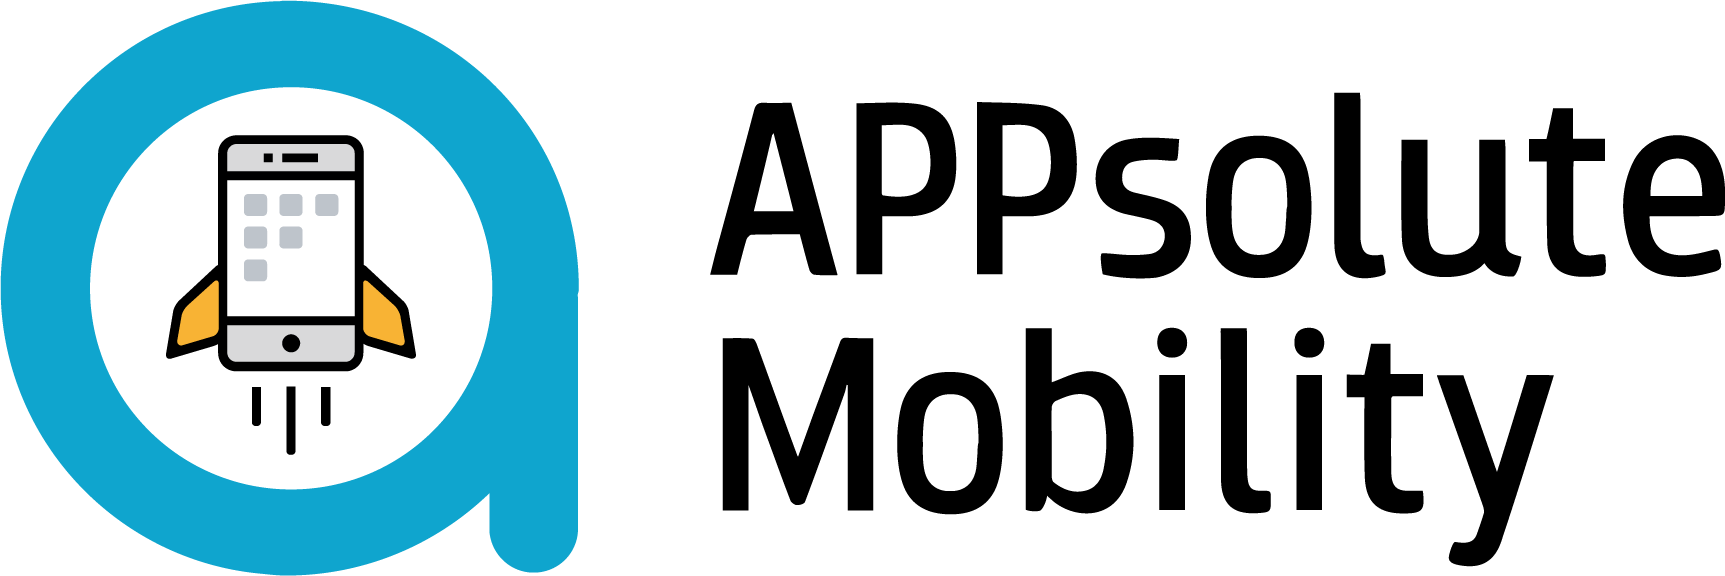 appsolute-mobility-gmbh-logo